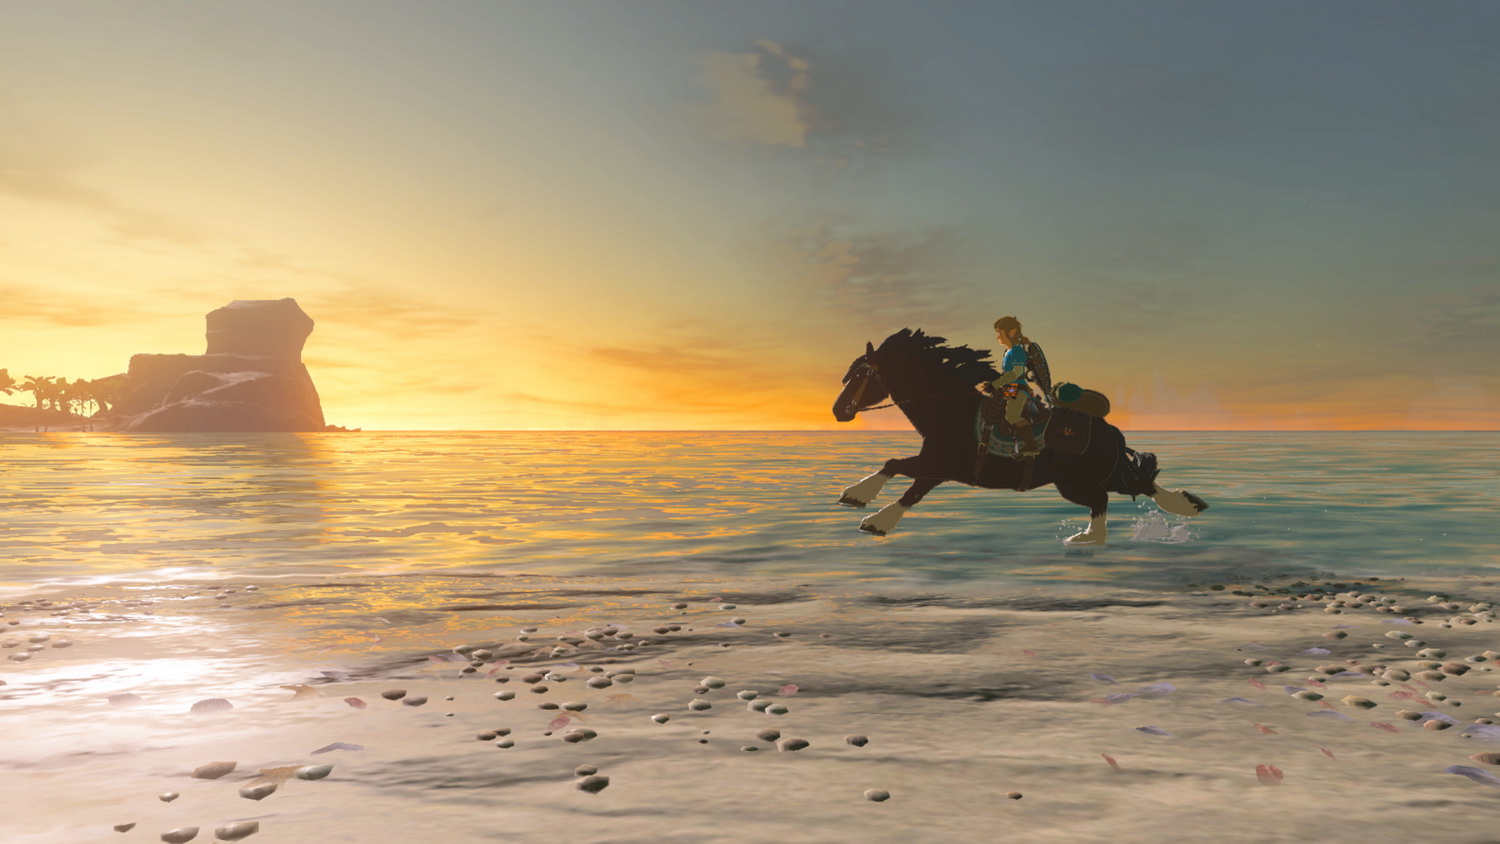 Canvastavla The Legend of Zelda: Breath of The Wild - Sunset